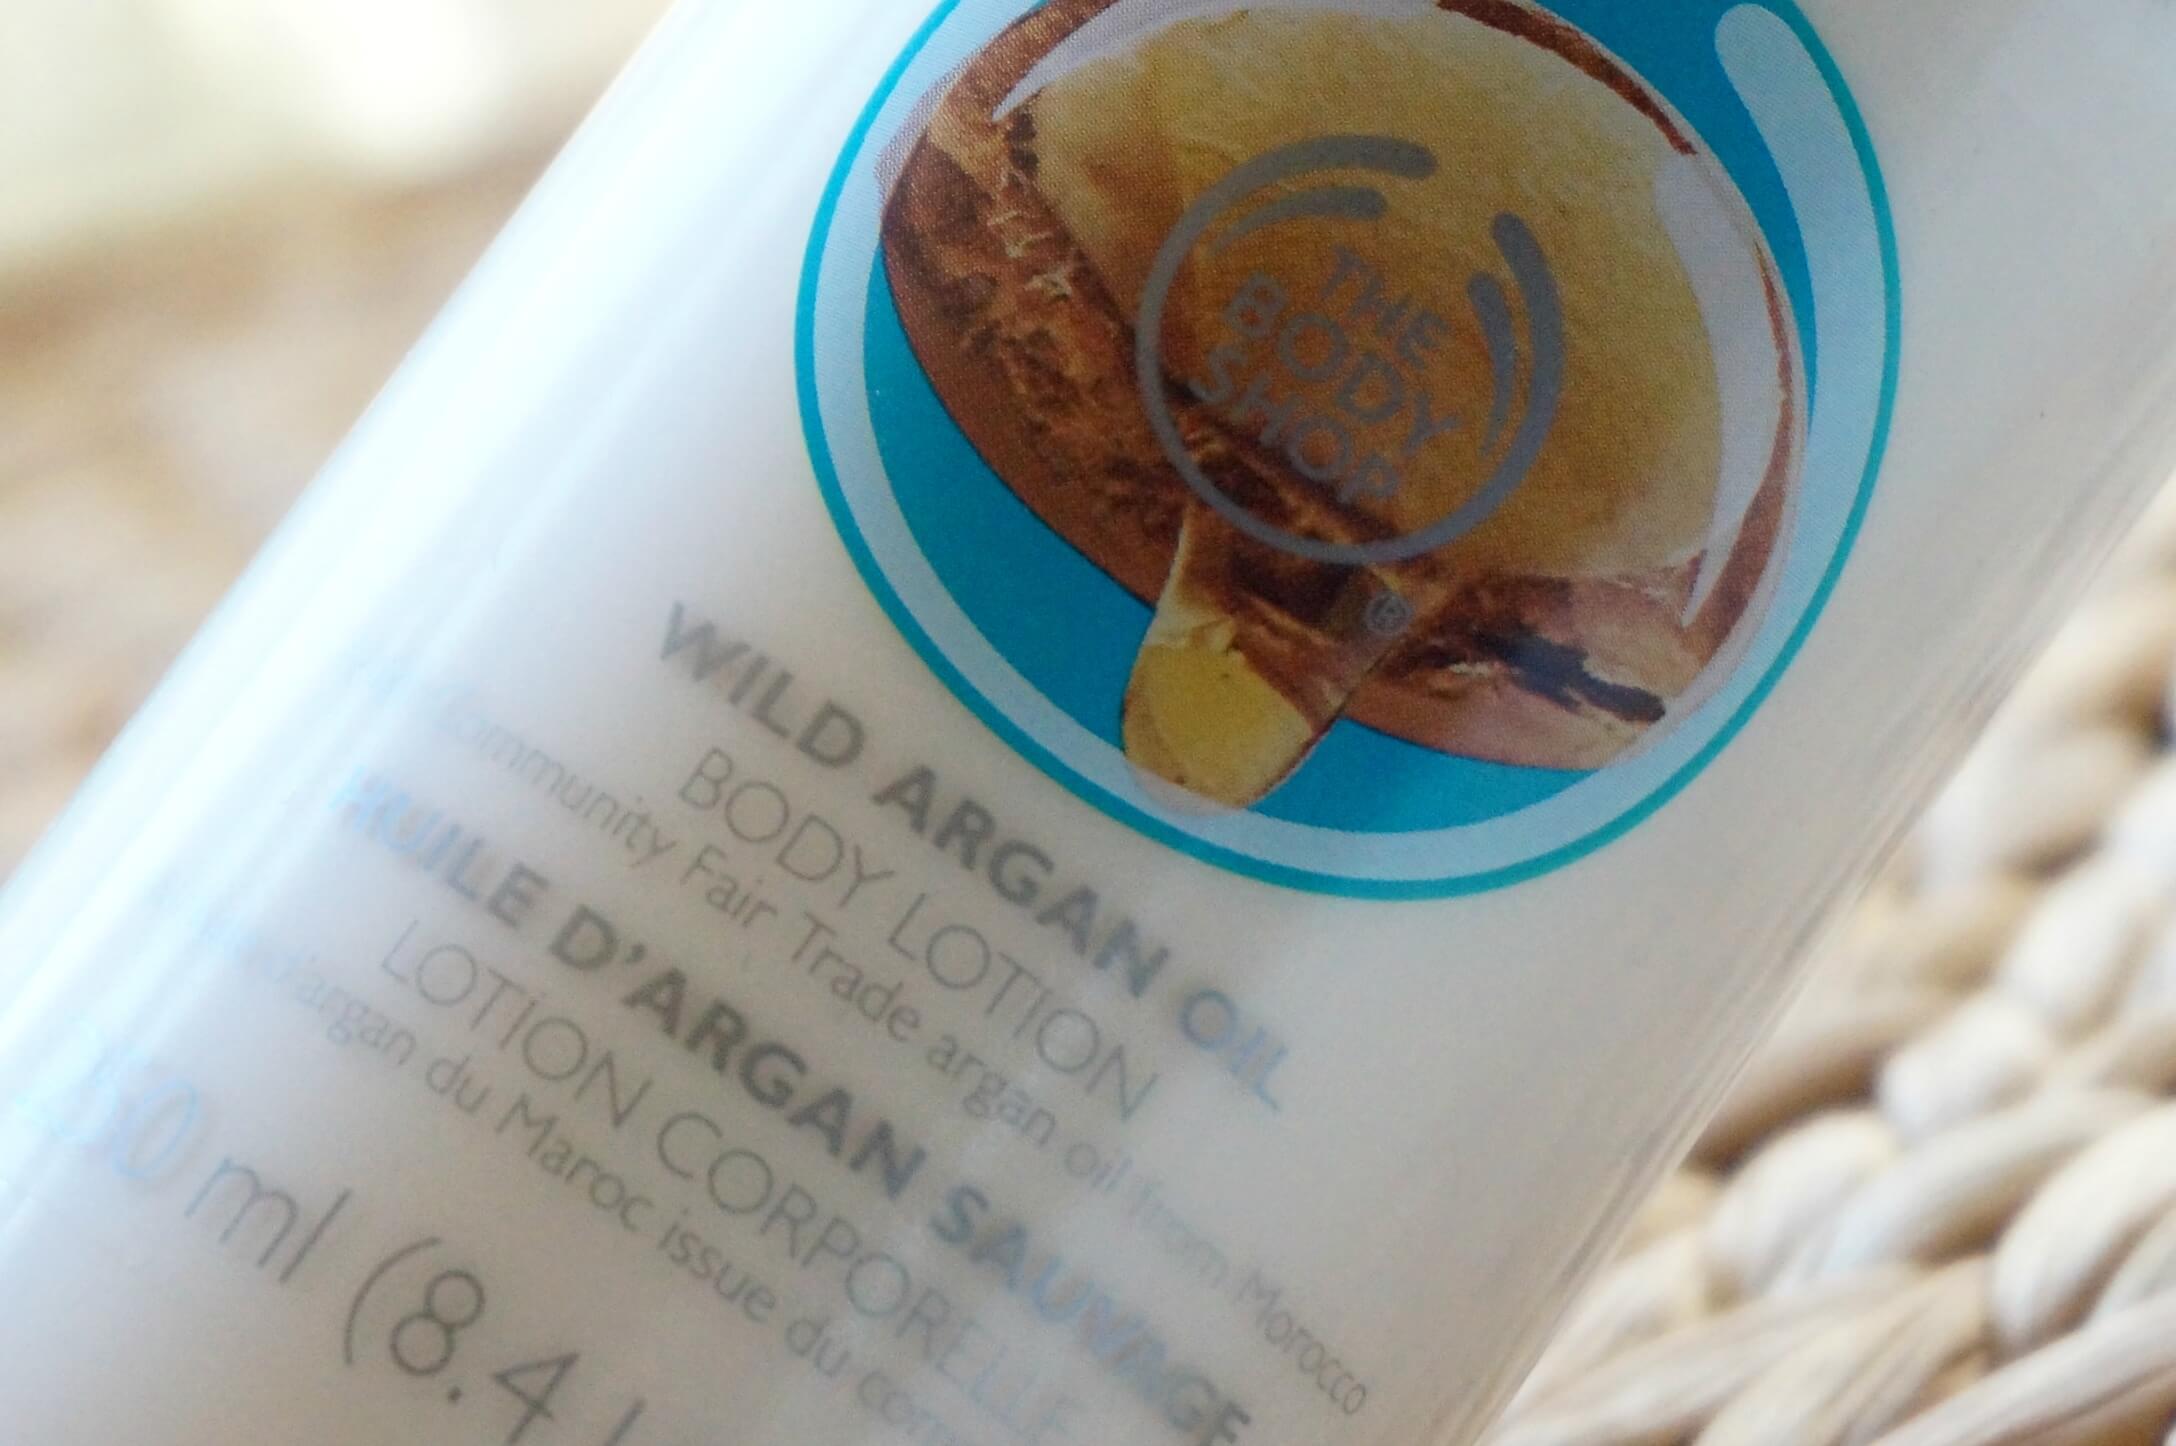 The Body Shop Wild Argan oil body lotion